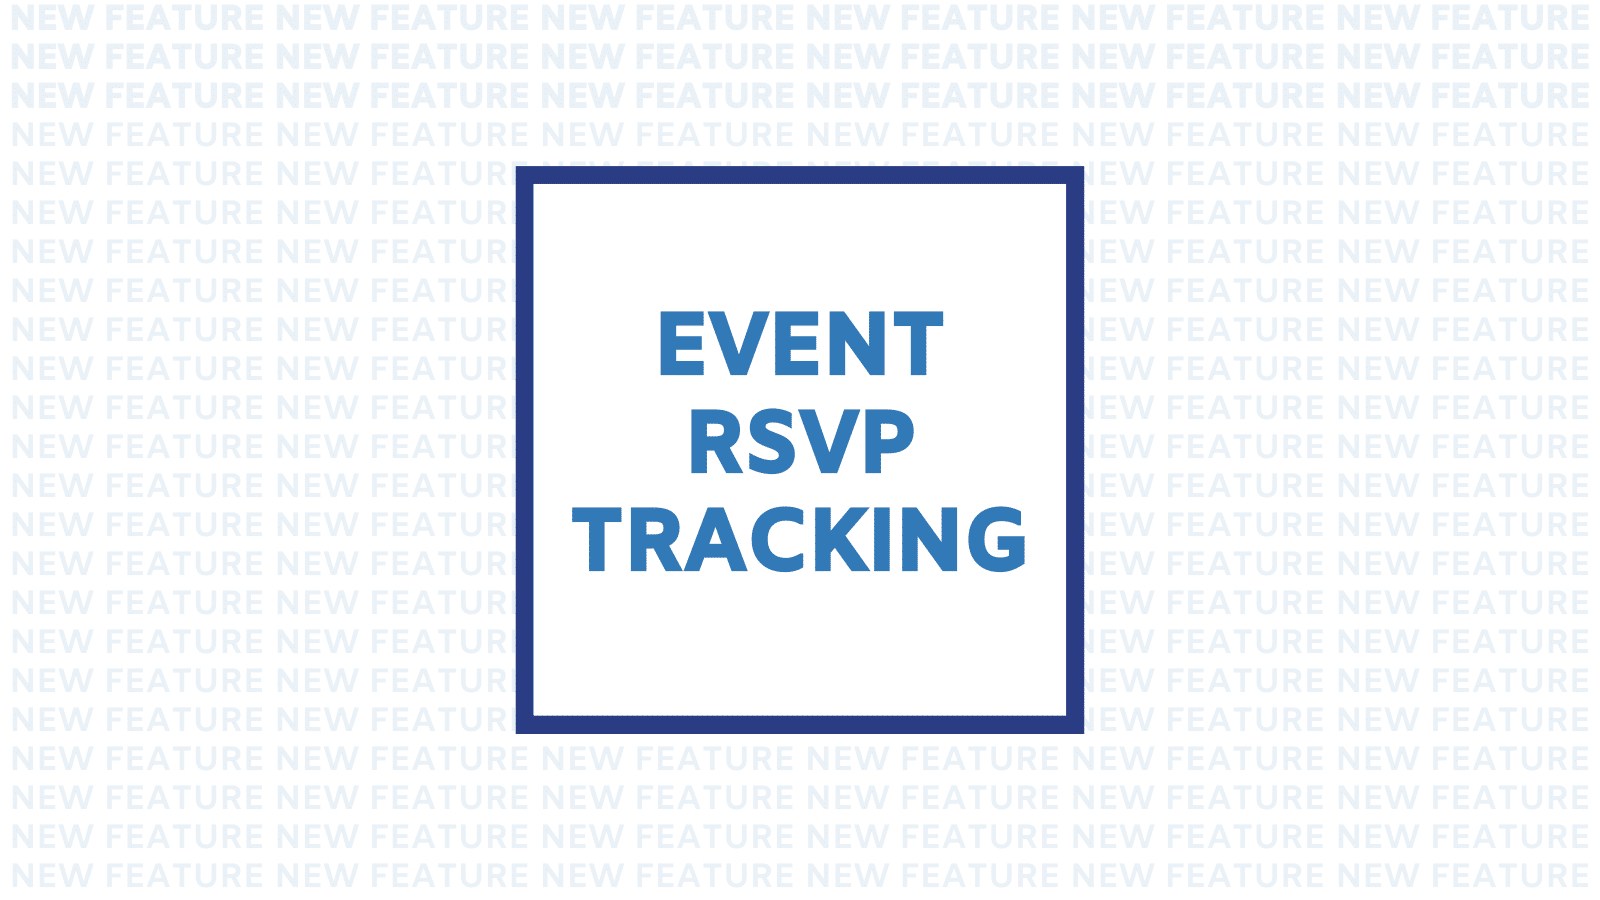 Event RSVP Tracking